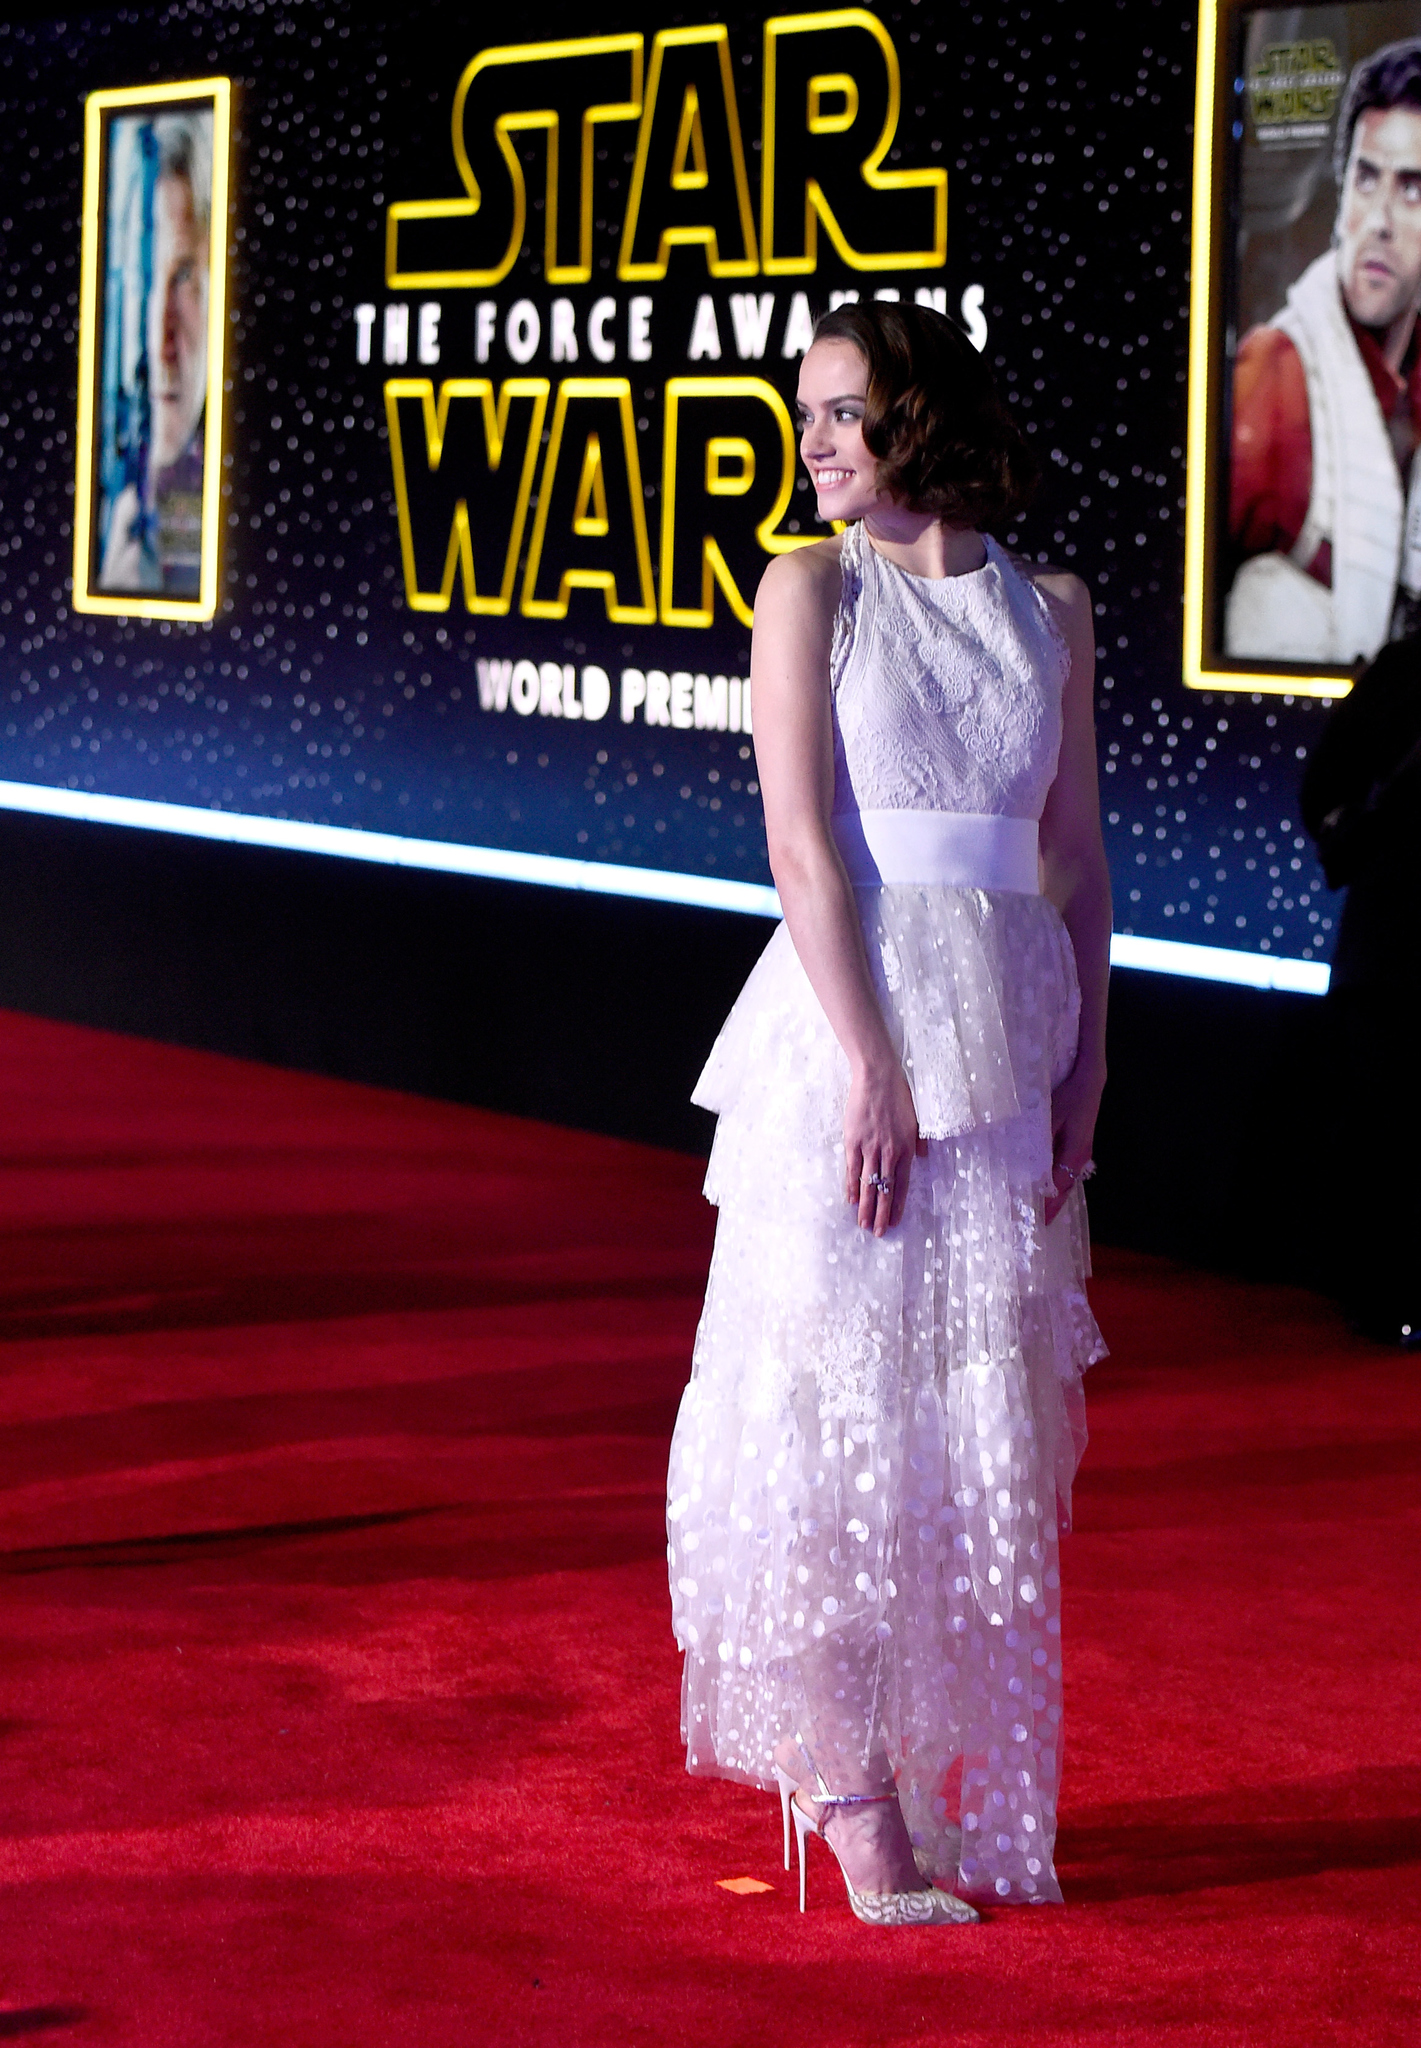 Daisy Ridley at event of Zvaigzdziu karai: galia nubunda (2015)